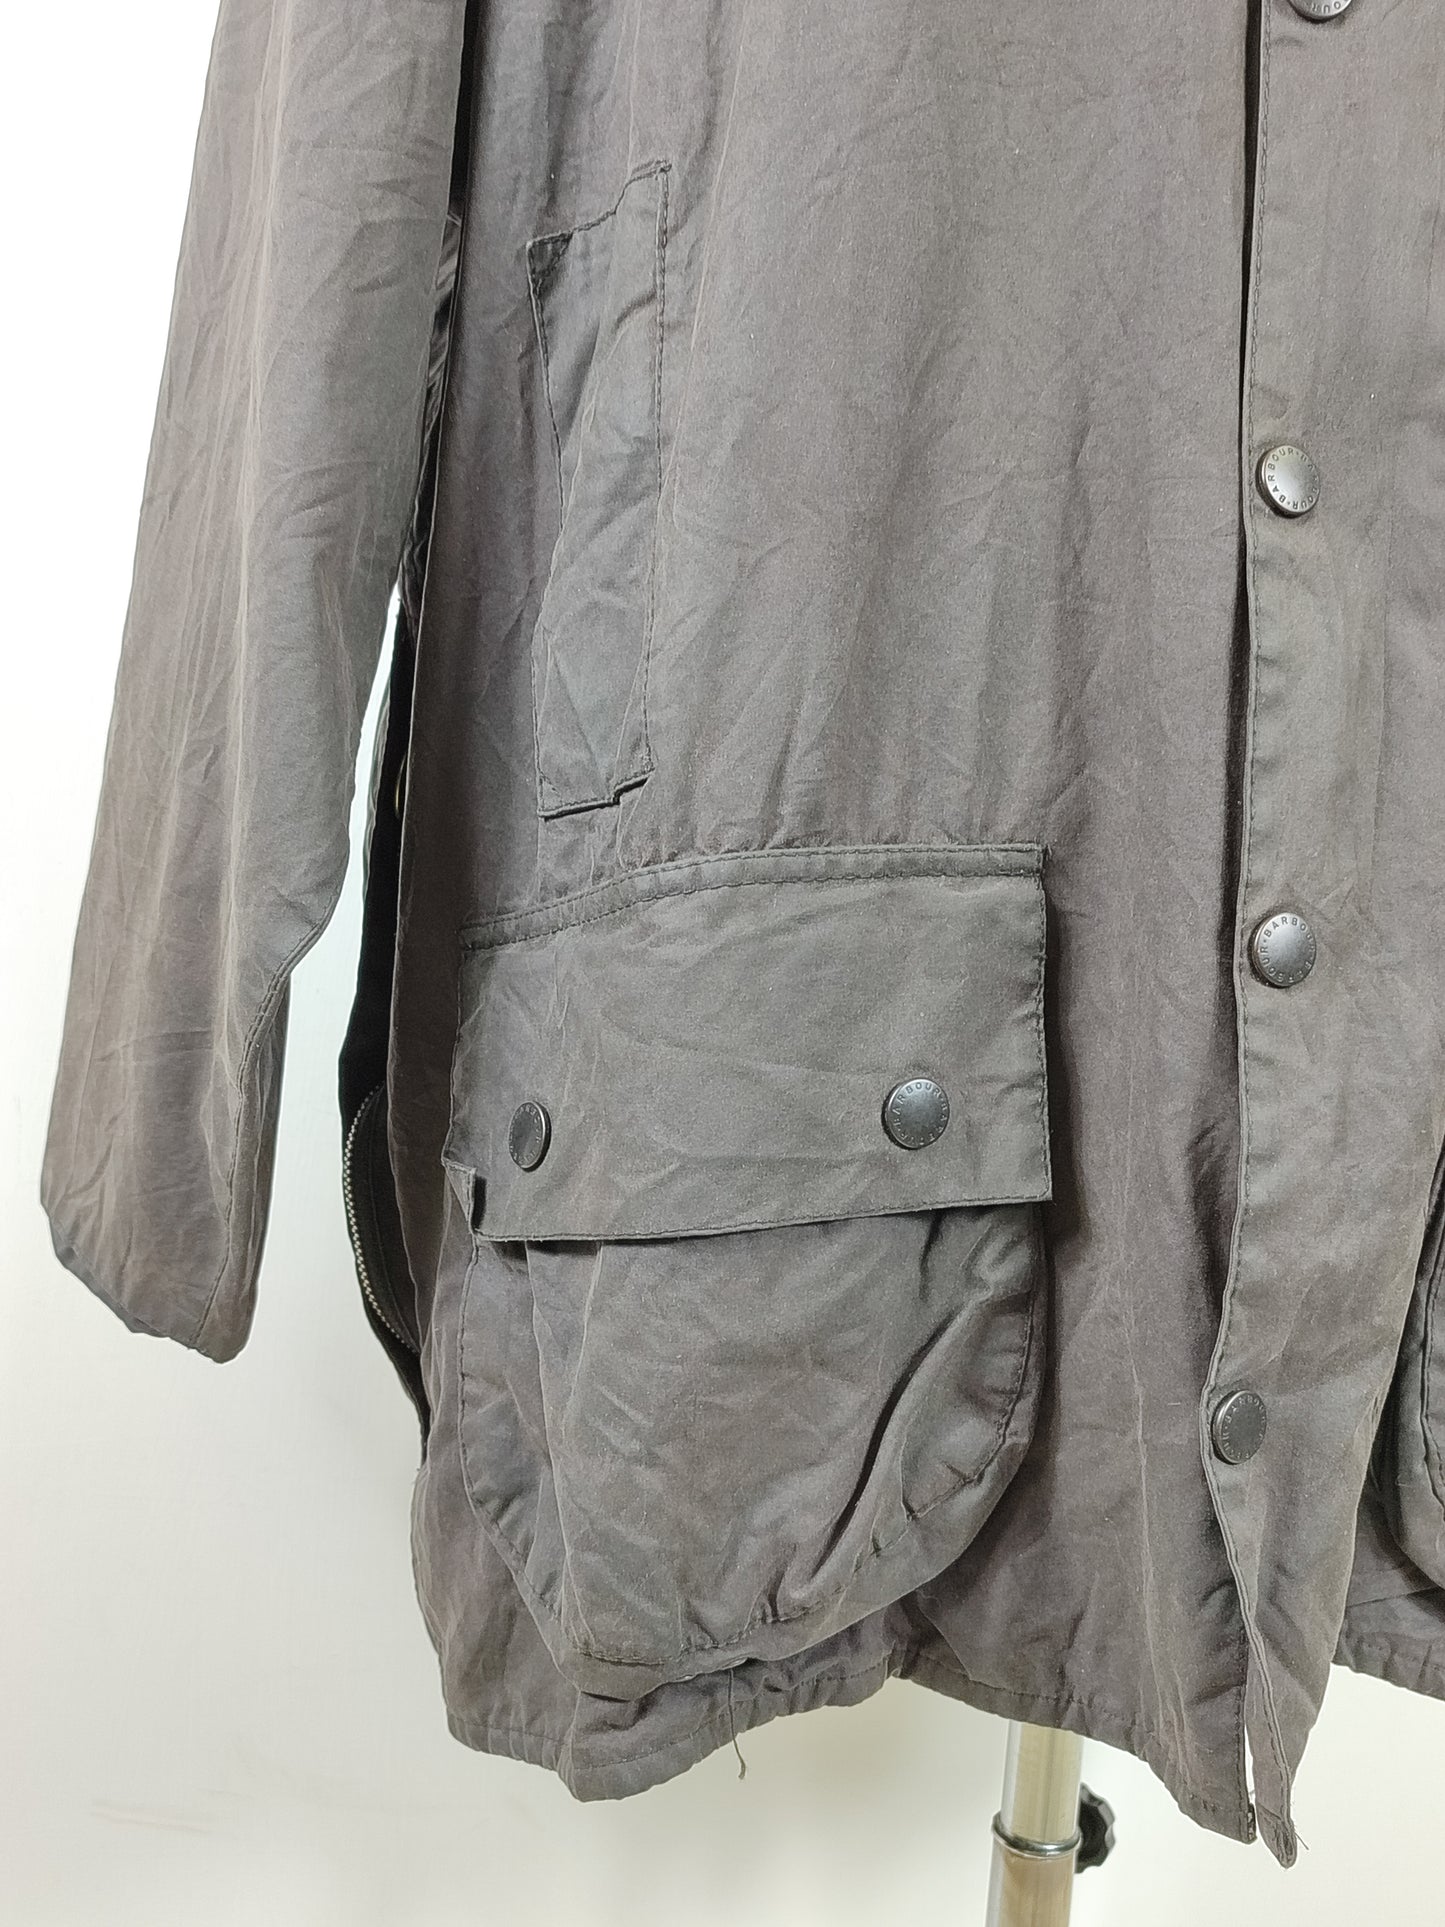 Barbour Giacca Beaufort nero cerato C46/117cm - Man Black Beaufort Waxed jacket size XL